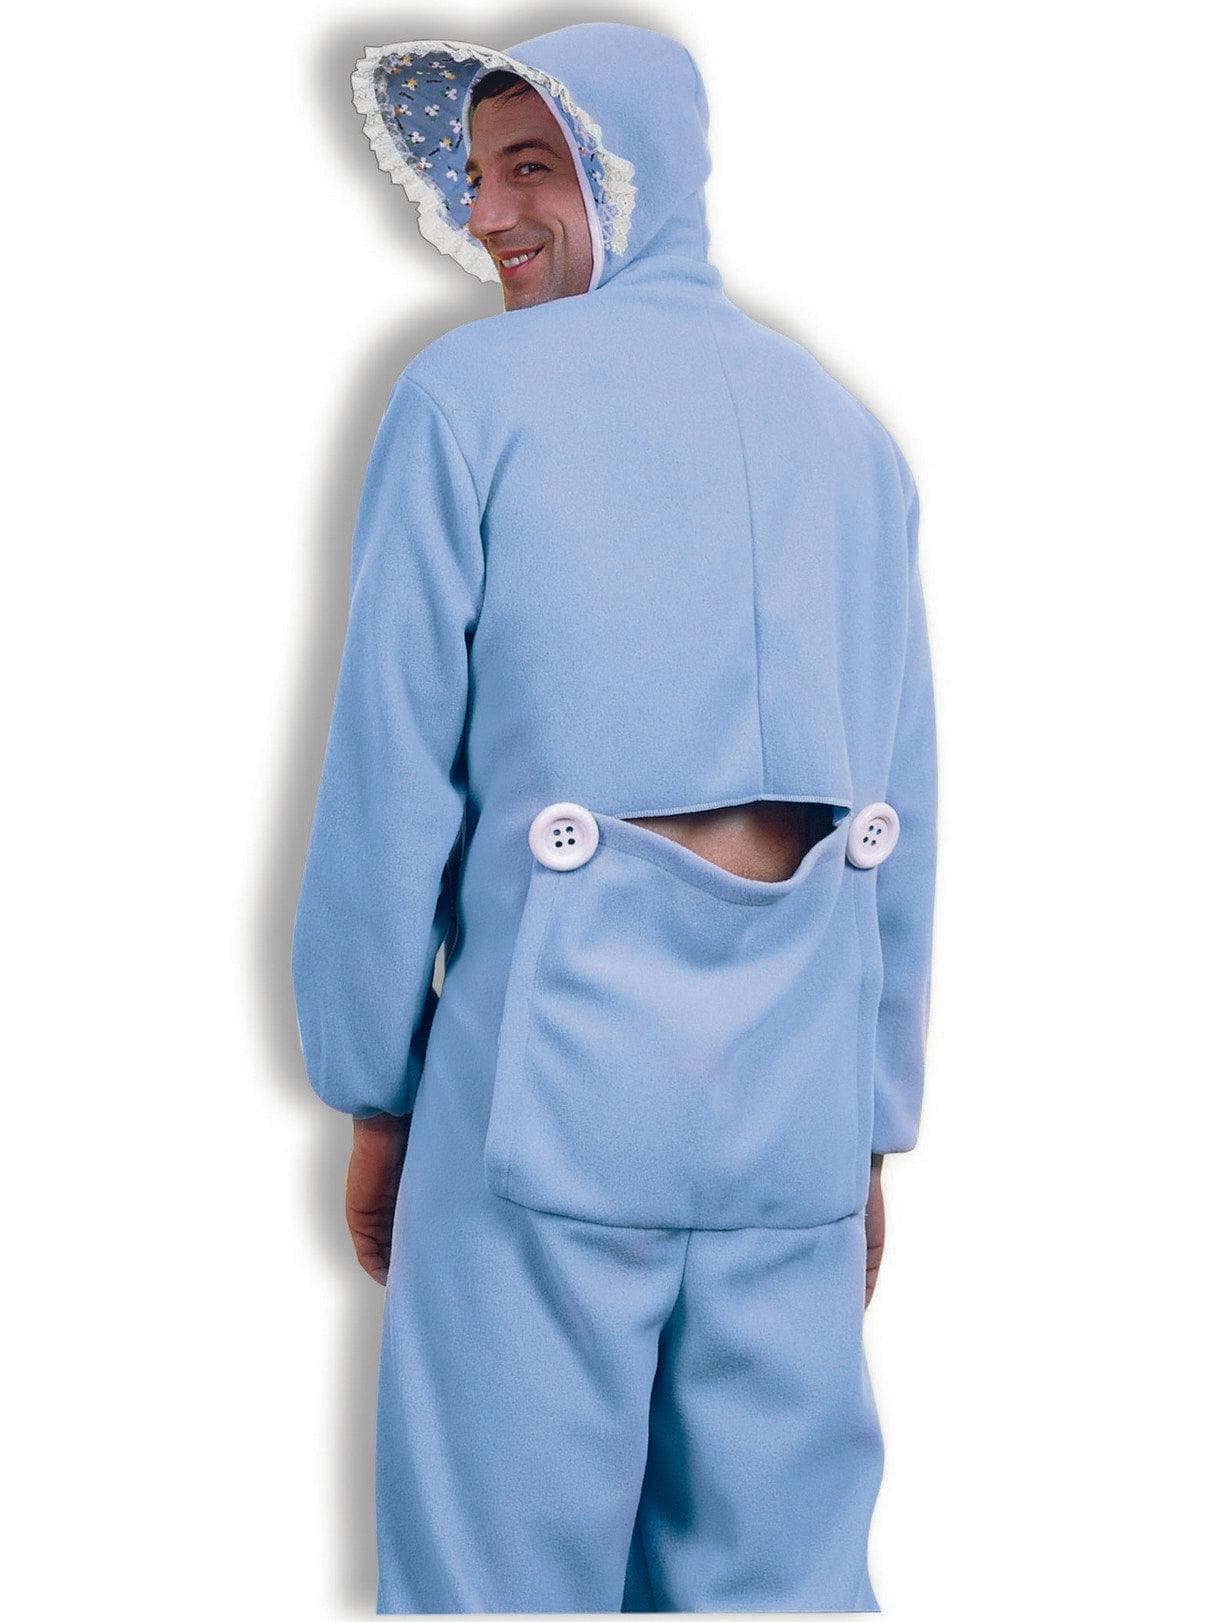 Adult Blue Jammies Costume - costumes.com